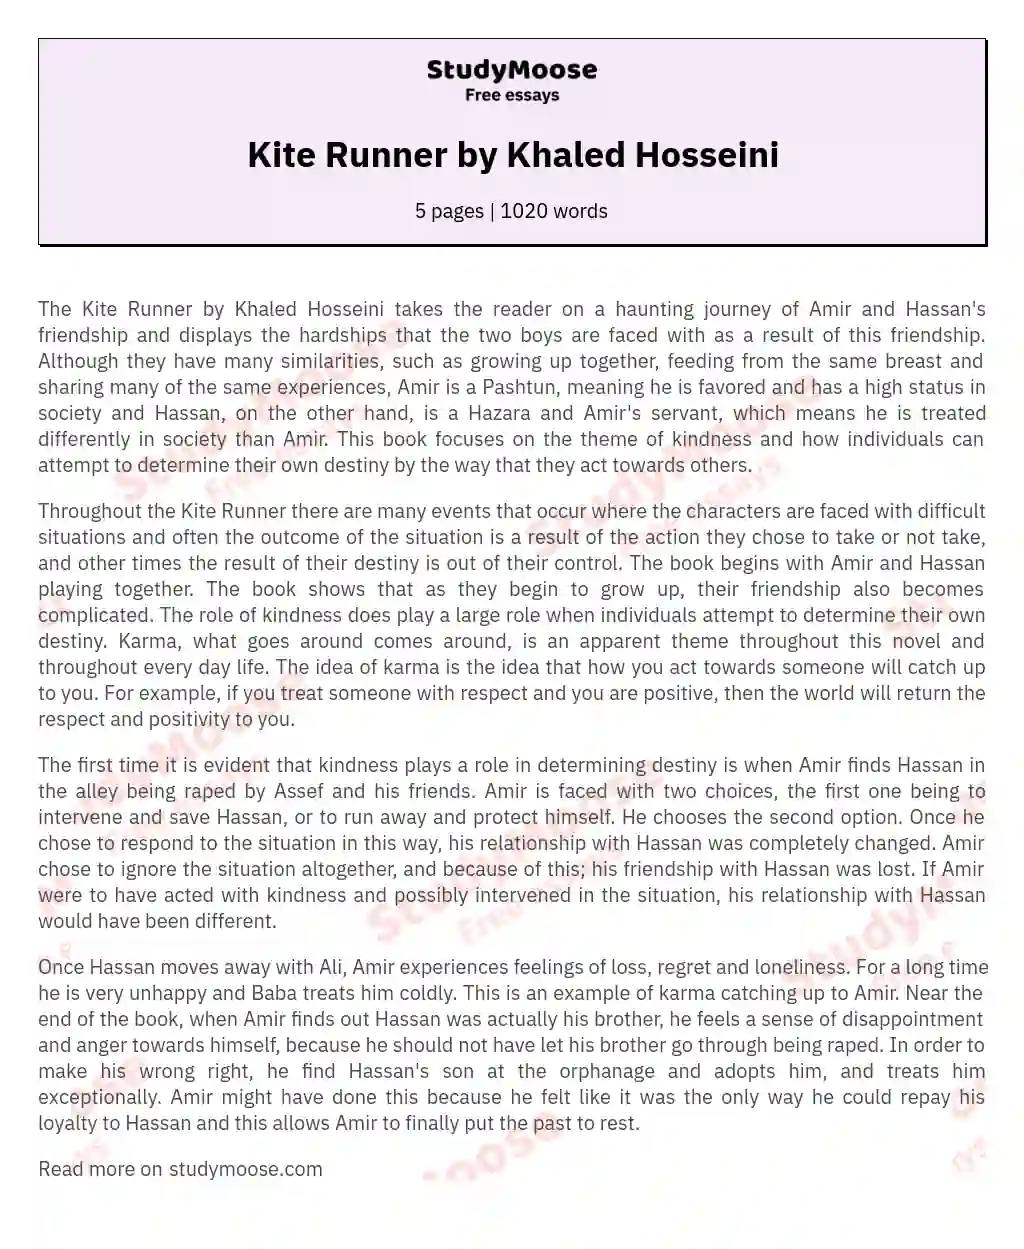 thematic essay on kite runner